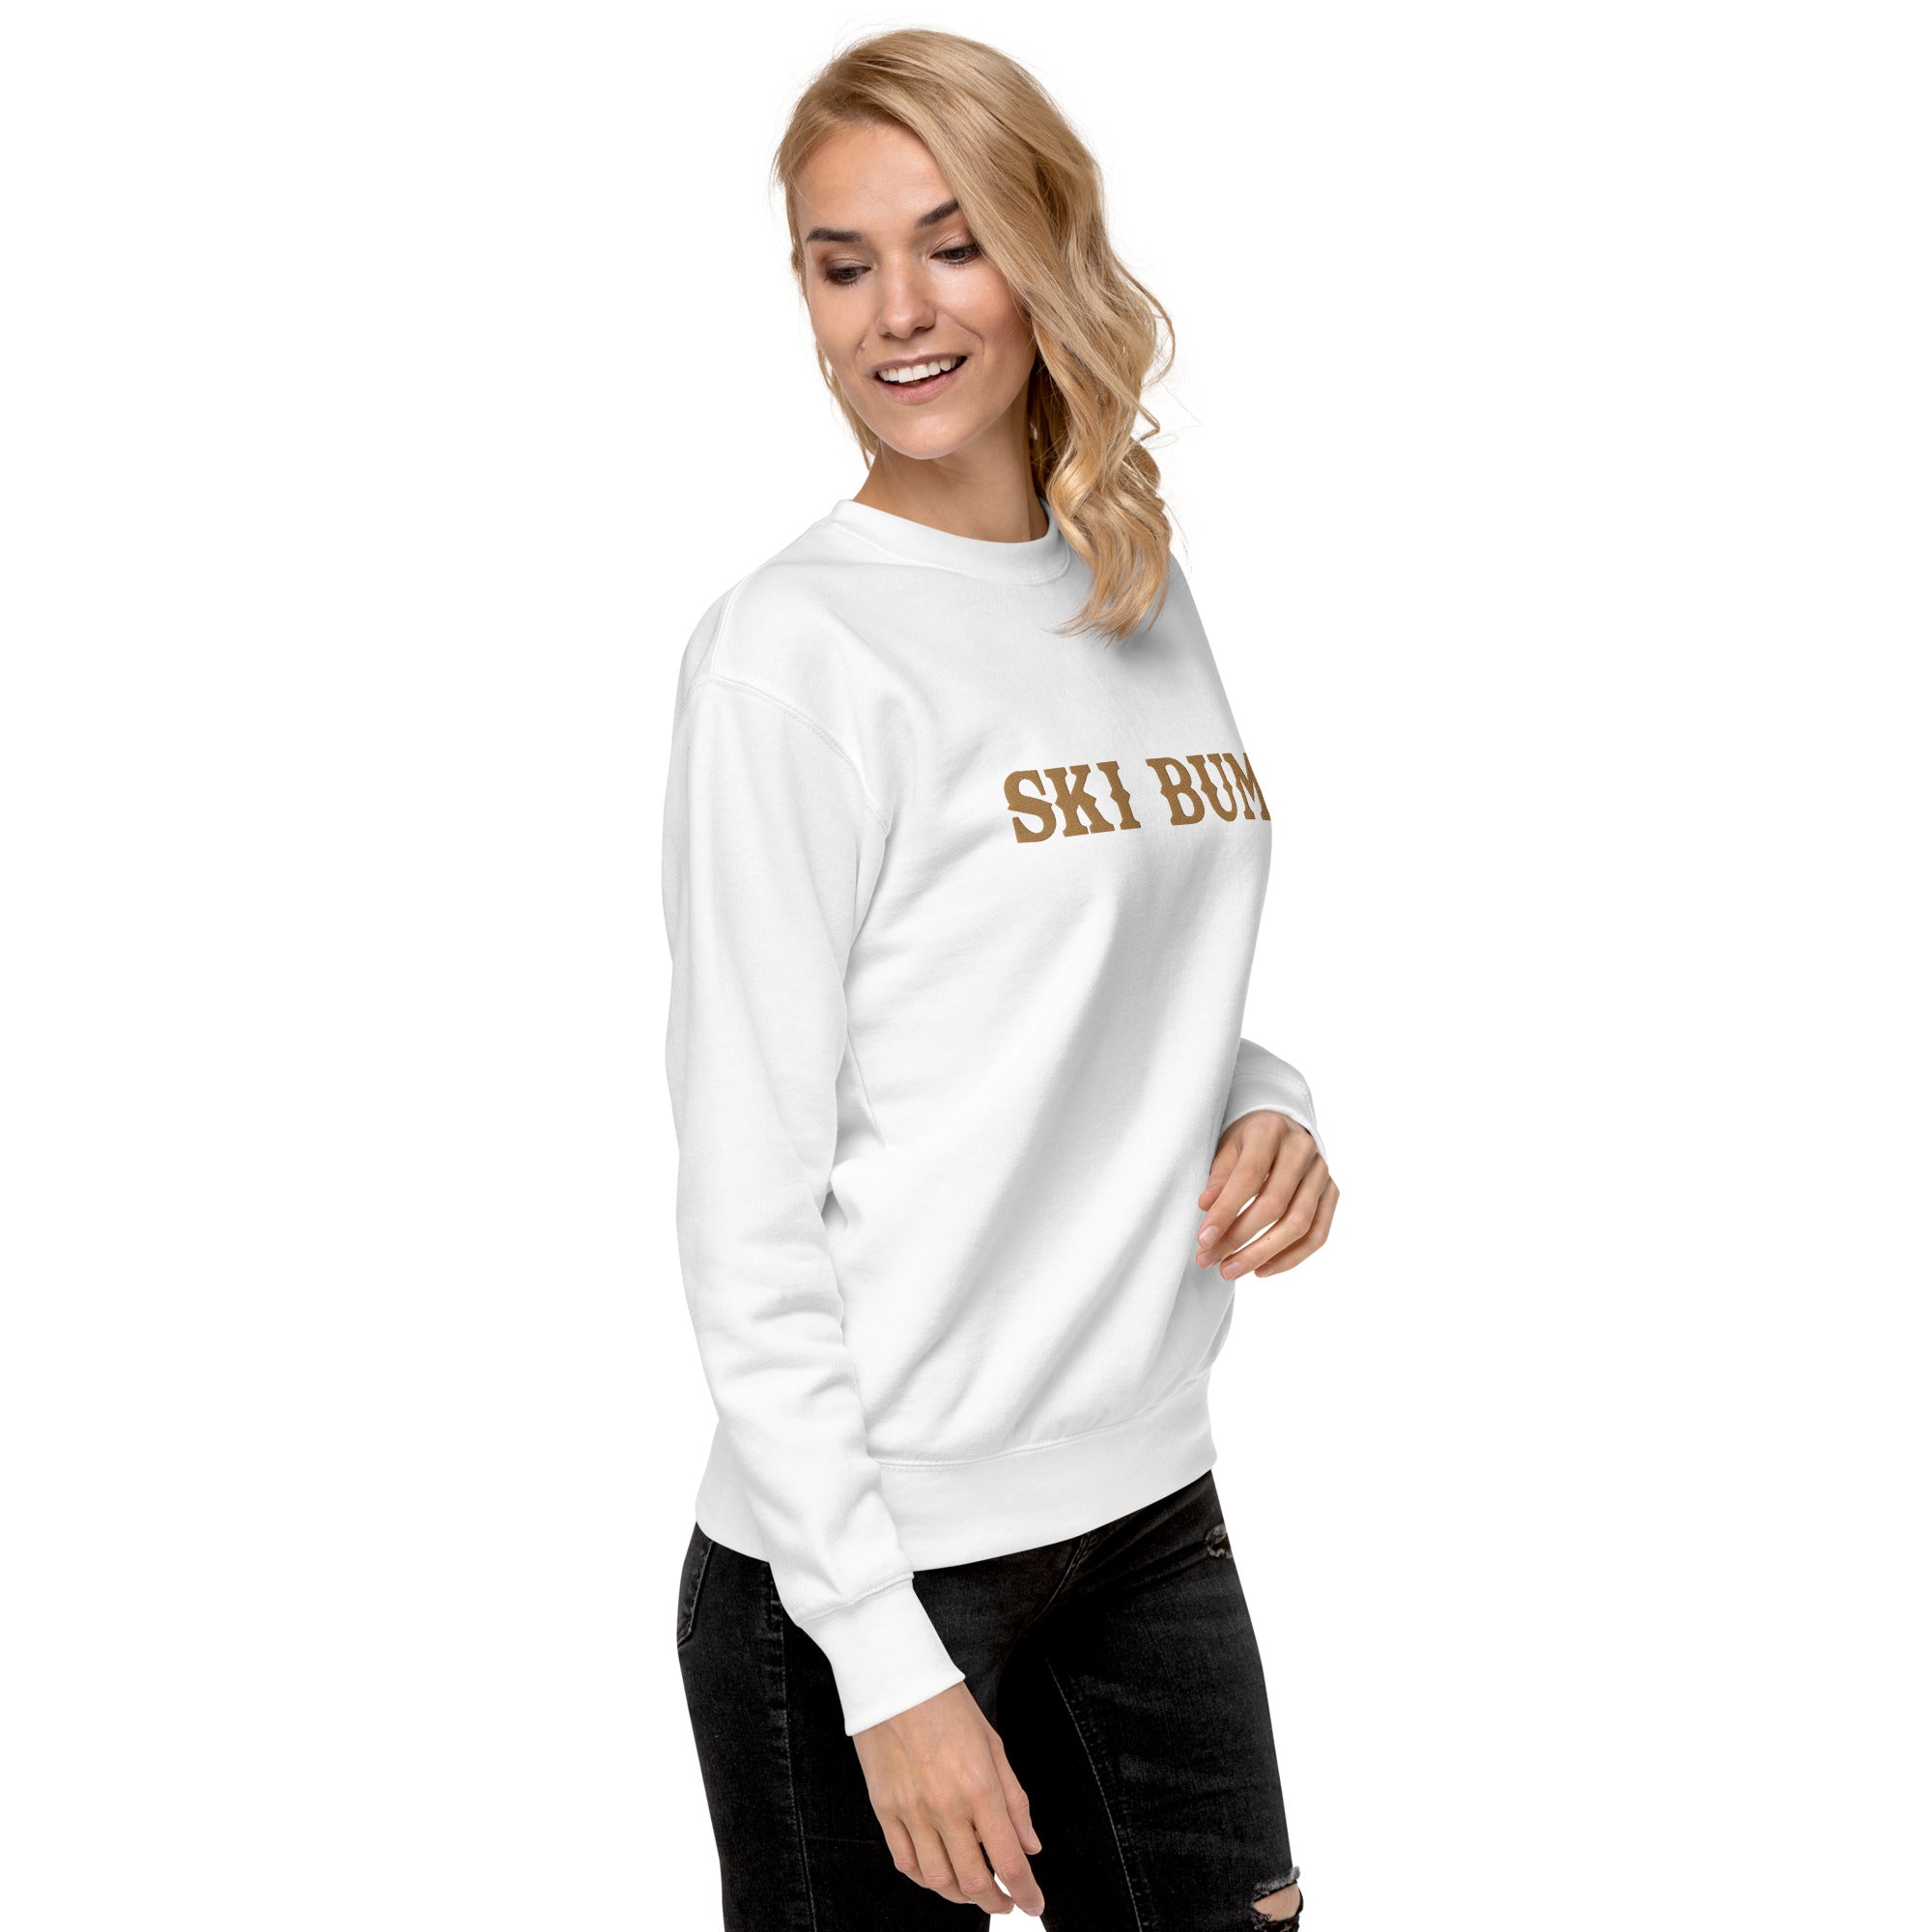 Sweatshirt premium unisexe Ski Bum Old Gold grand motif brodé